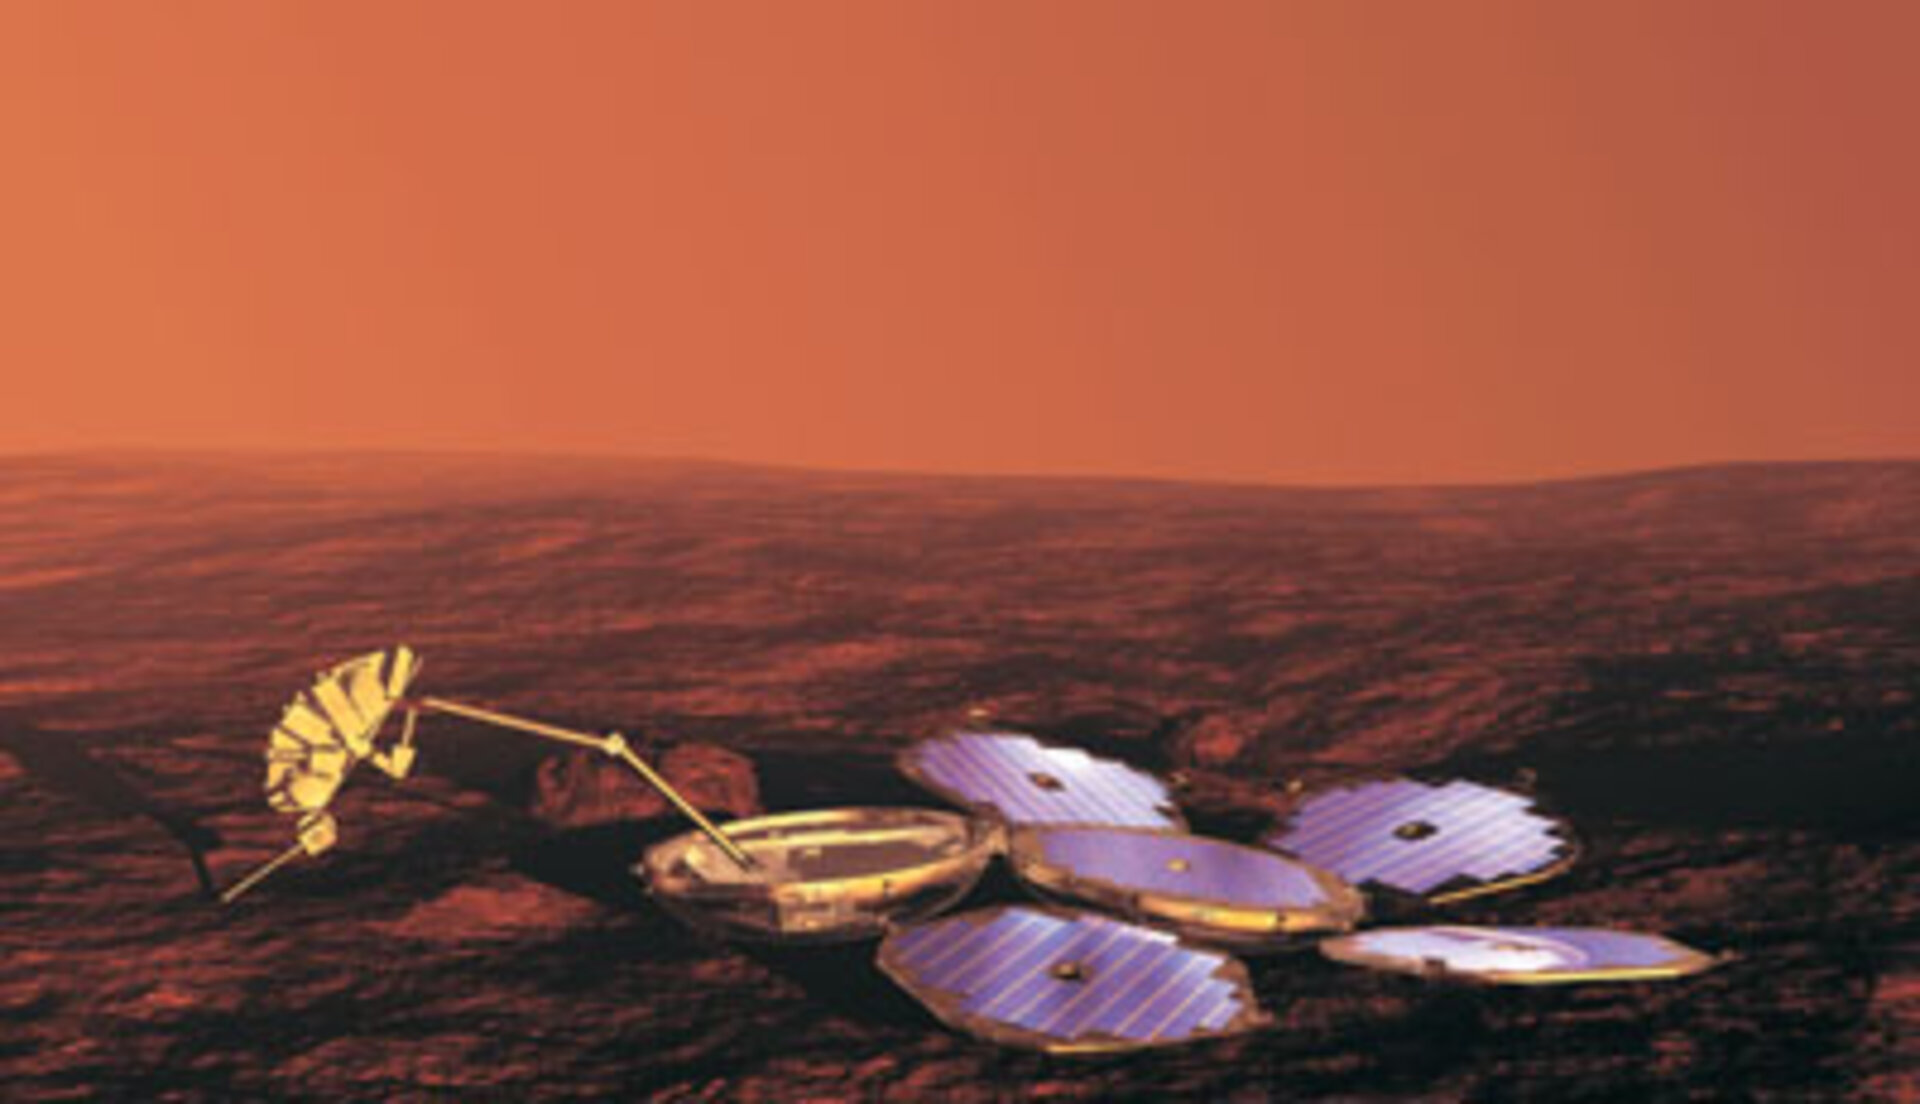 Mars Express landare Beagle 2